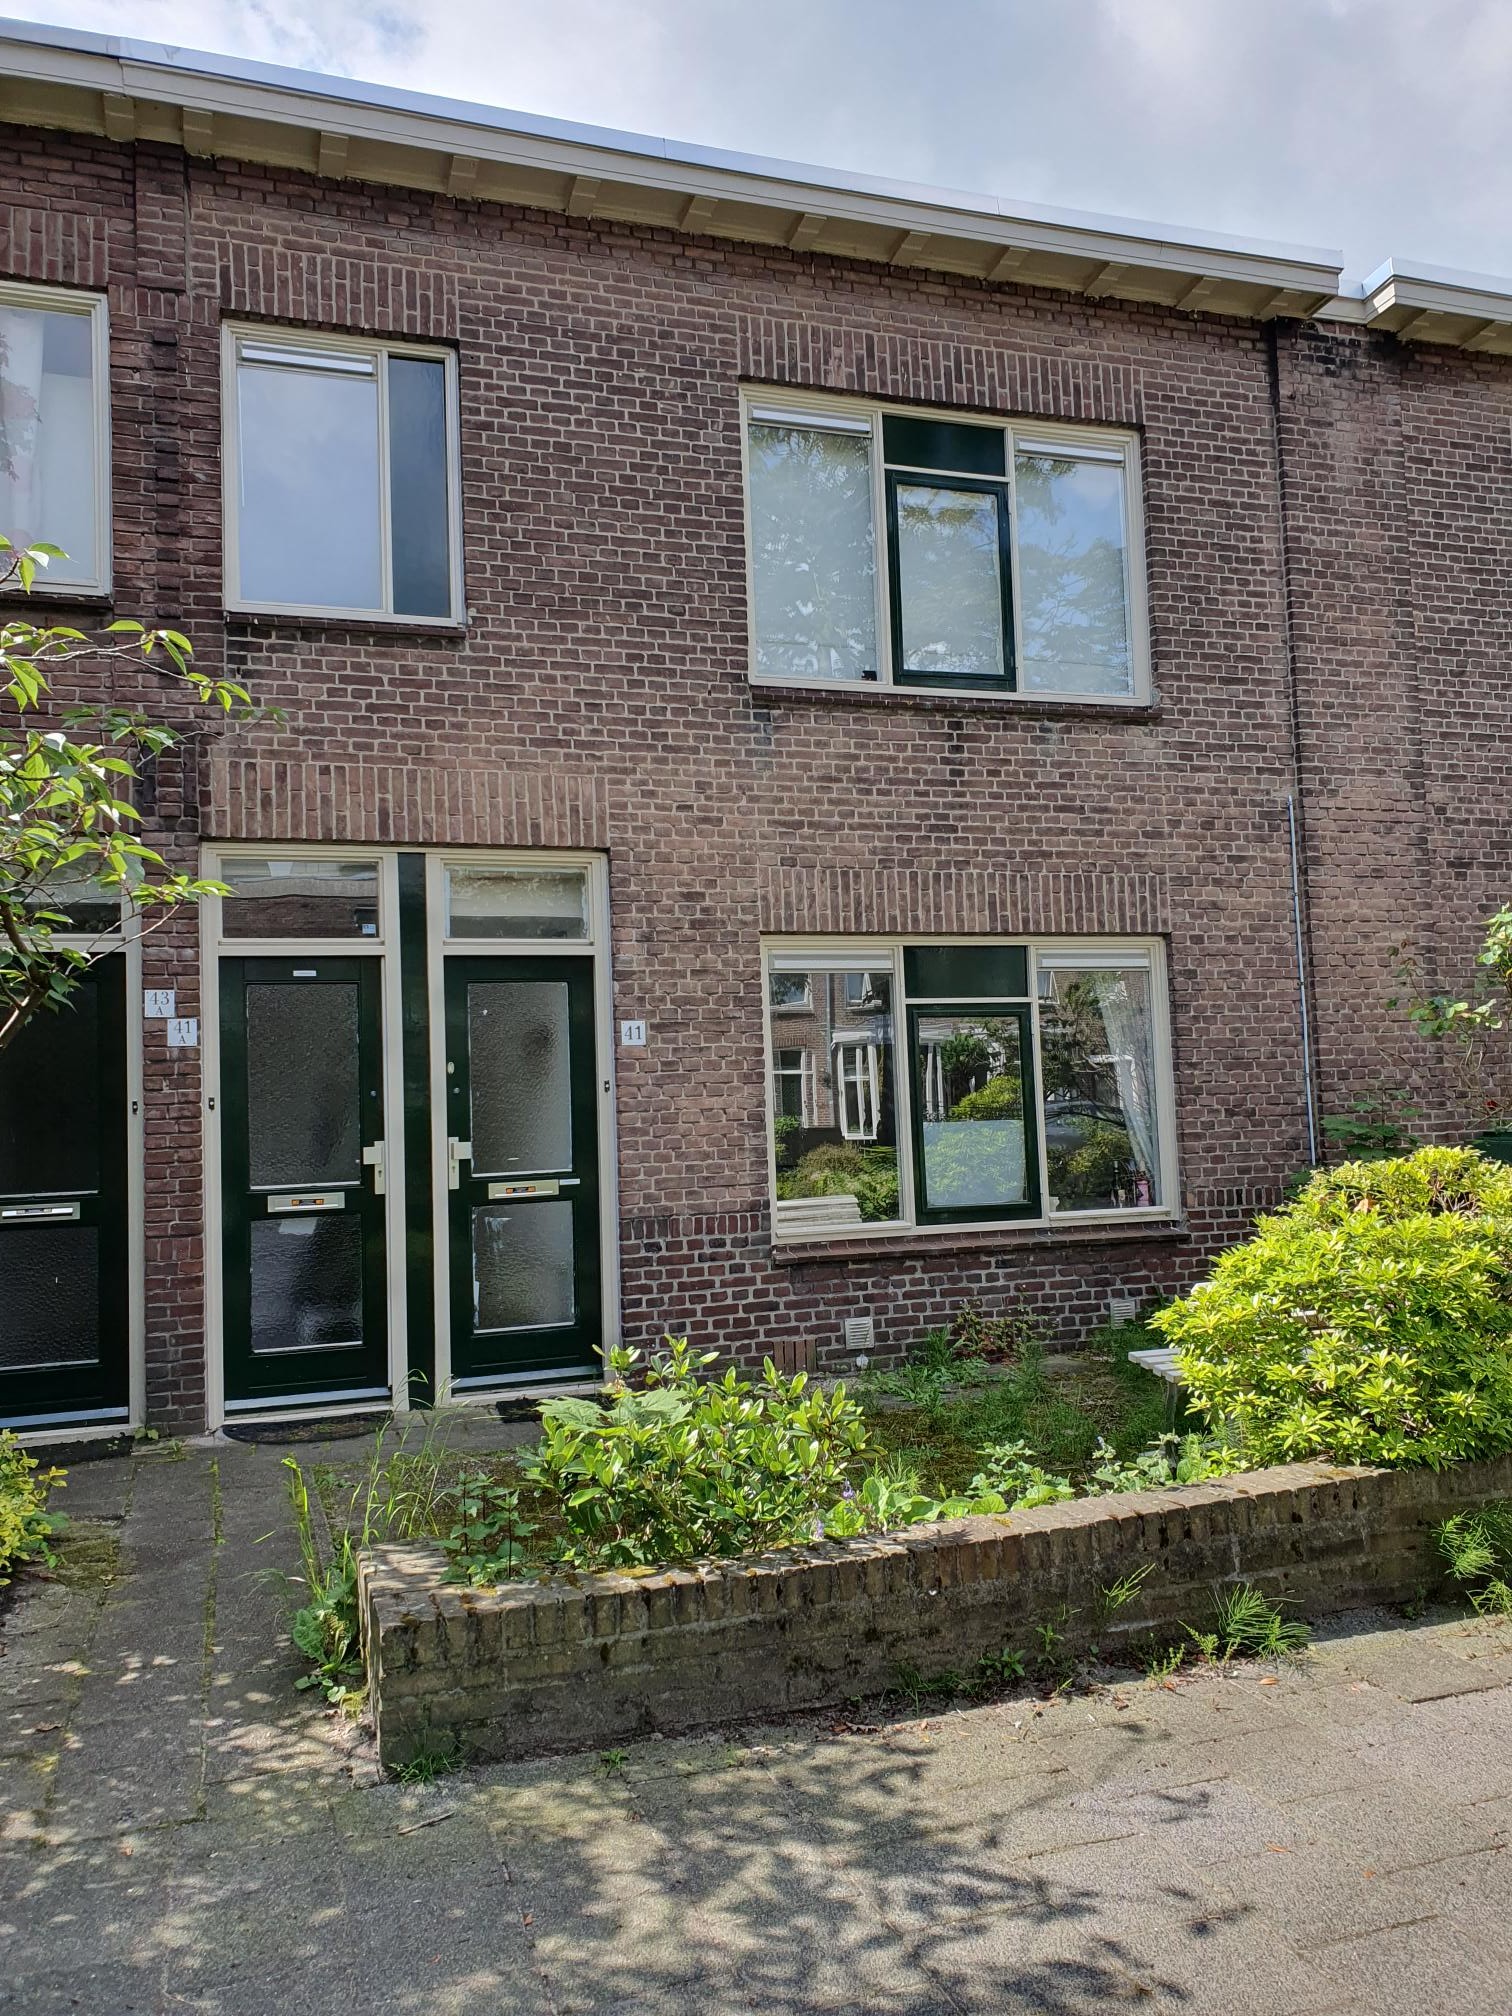 Leliestraat 41, 2313 BE Leiden, Nederland